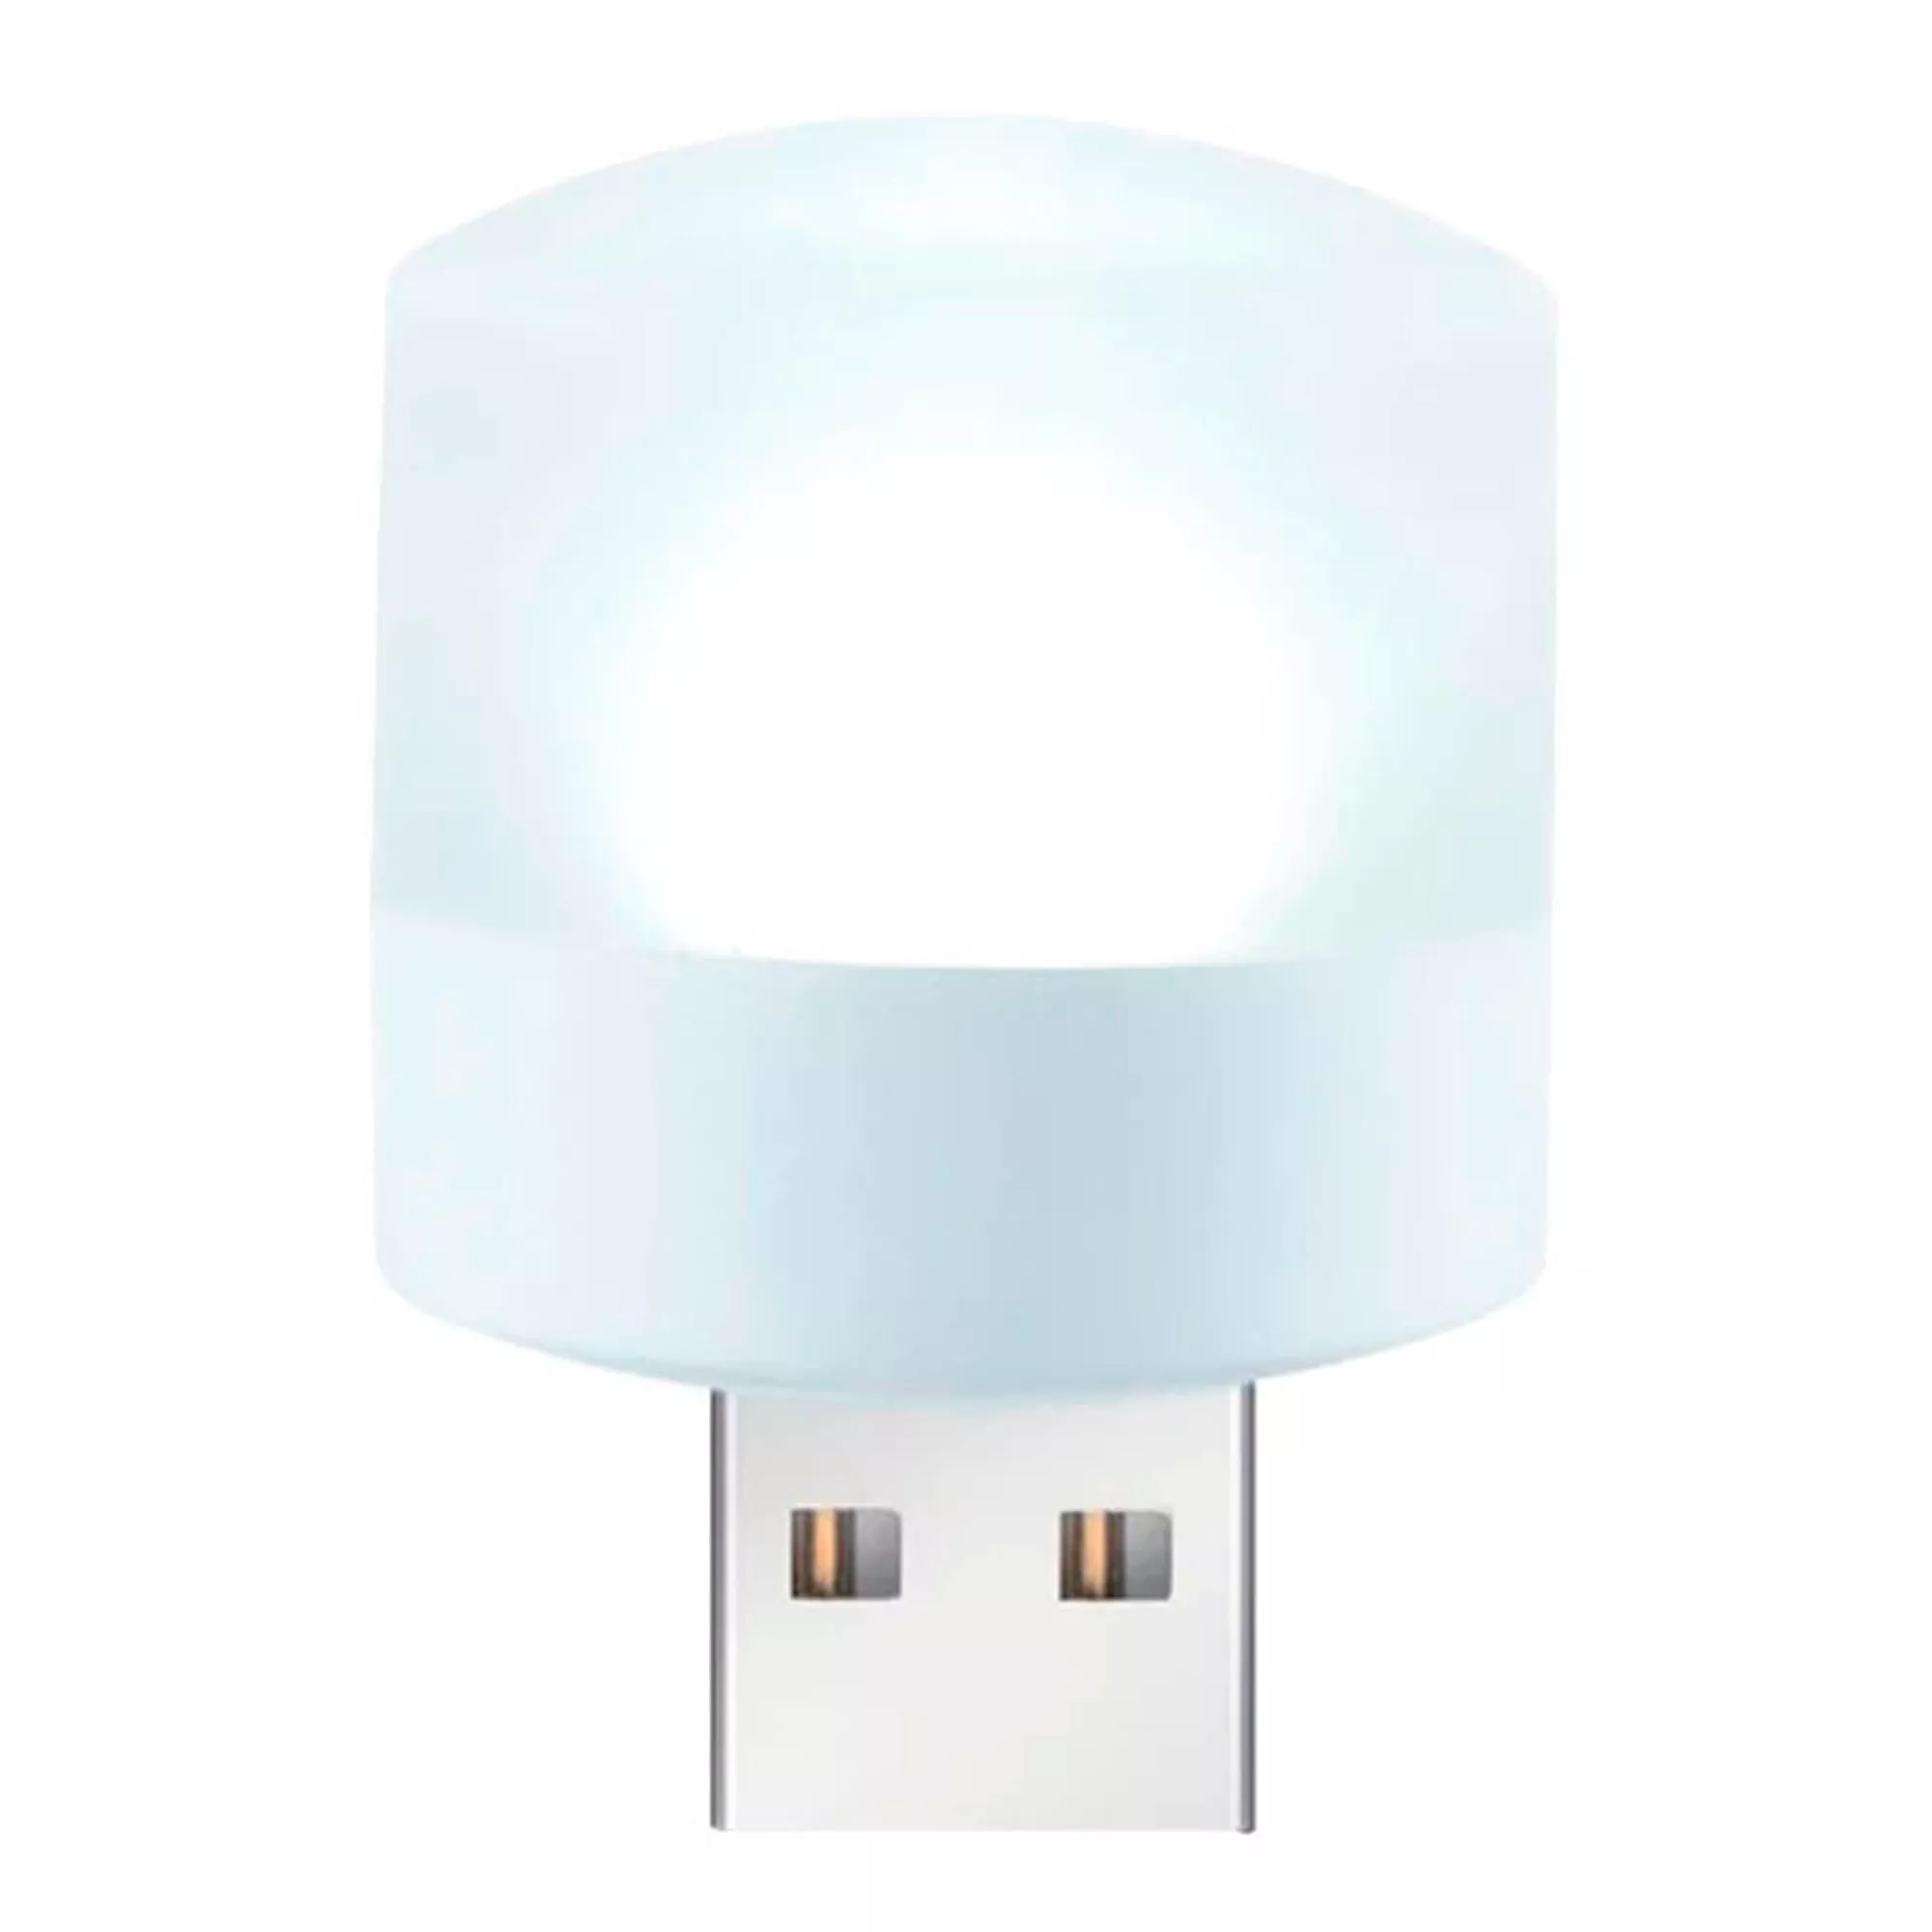 USB-лампа AccLab LED AL-LED01 1W 5000K White (1283126552809)